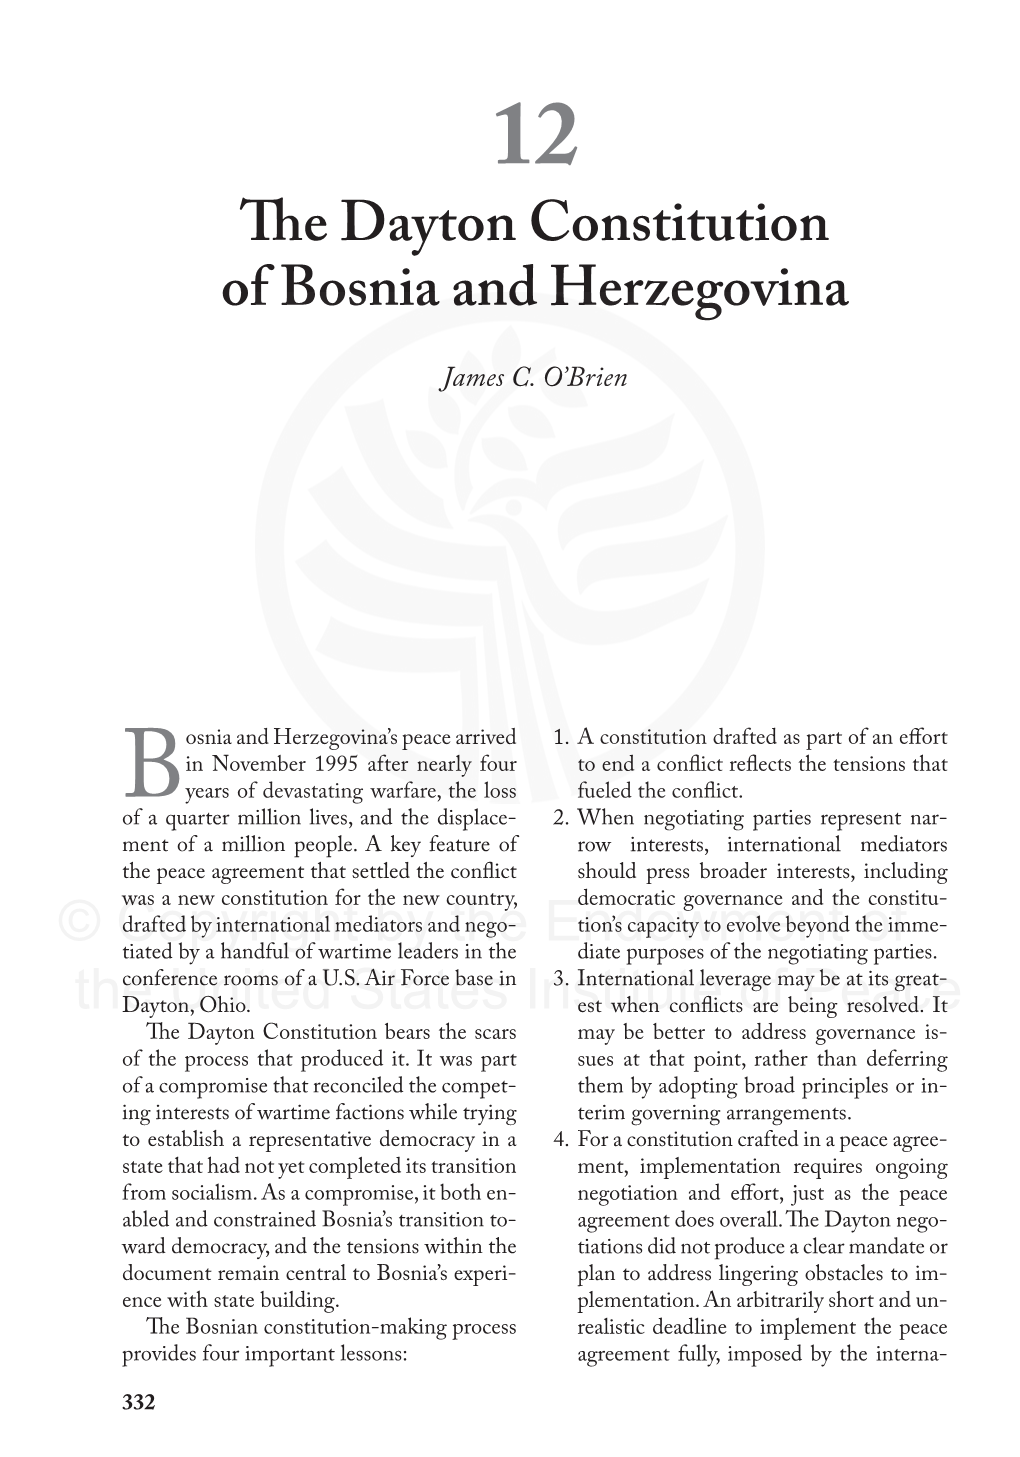 The Dayton Constitution of Bosnia and Herzegovina